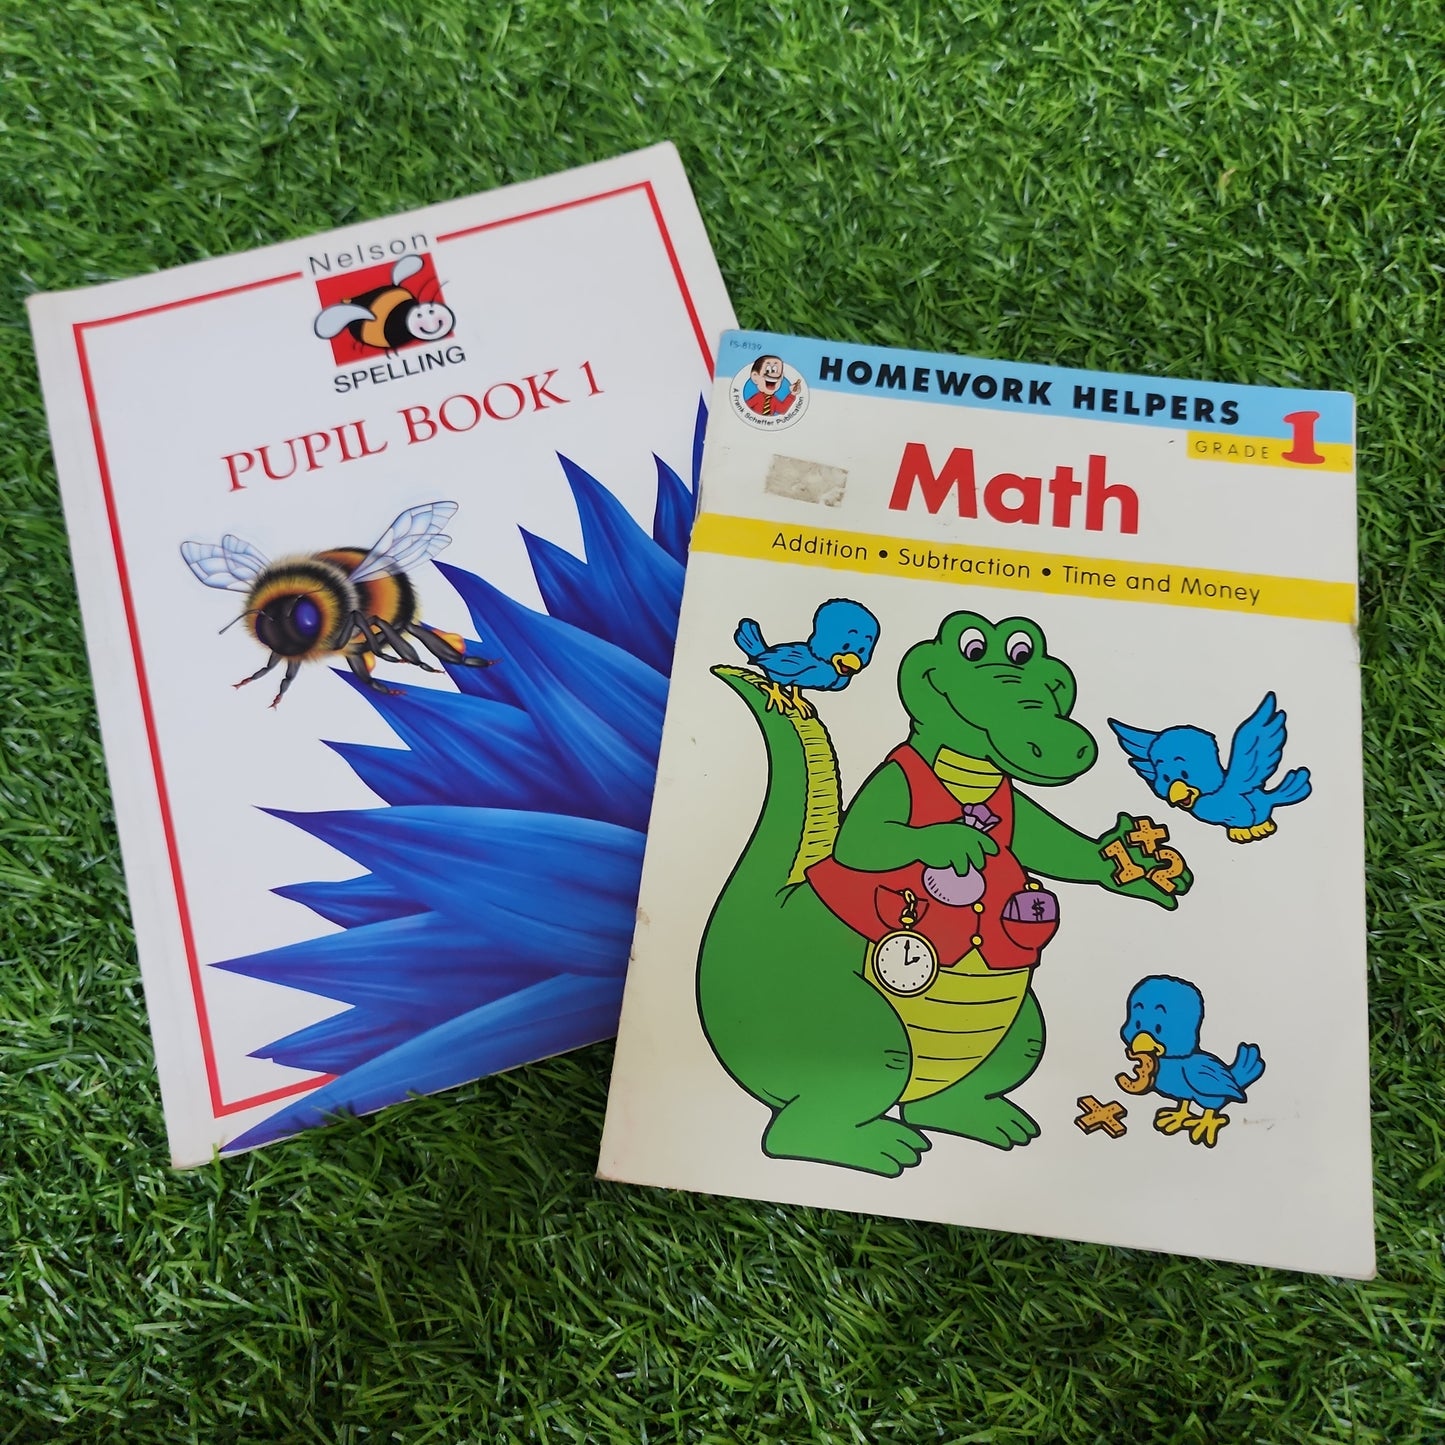 Math and Pupil book